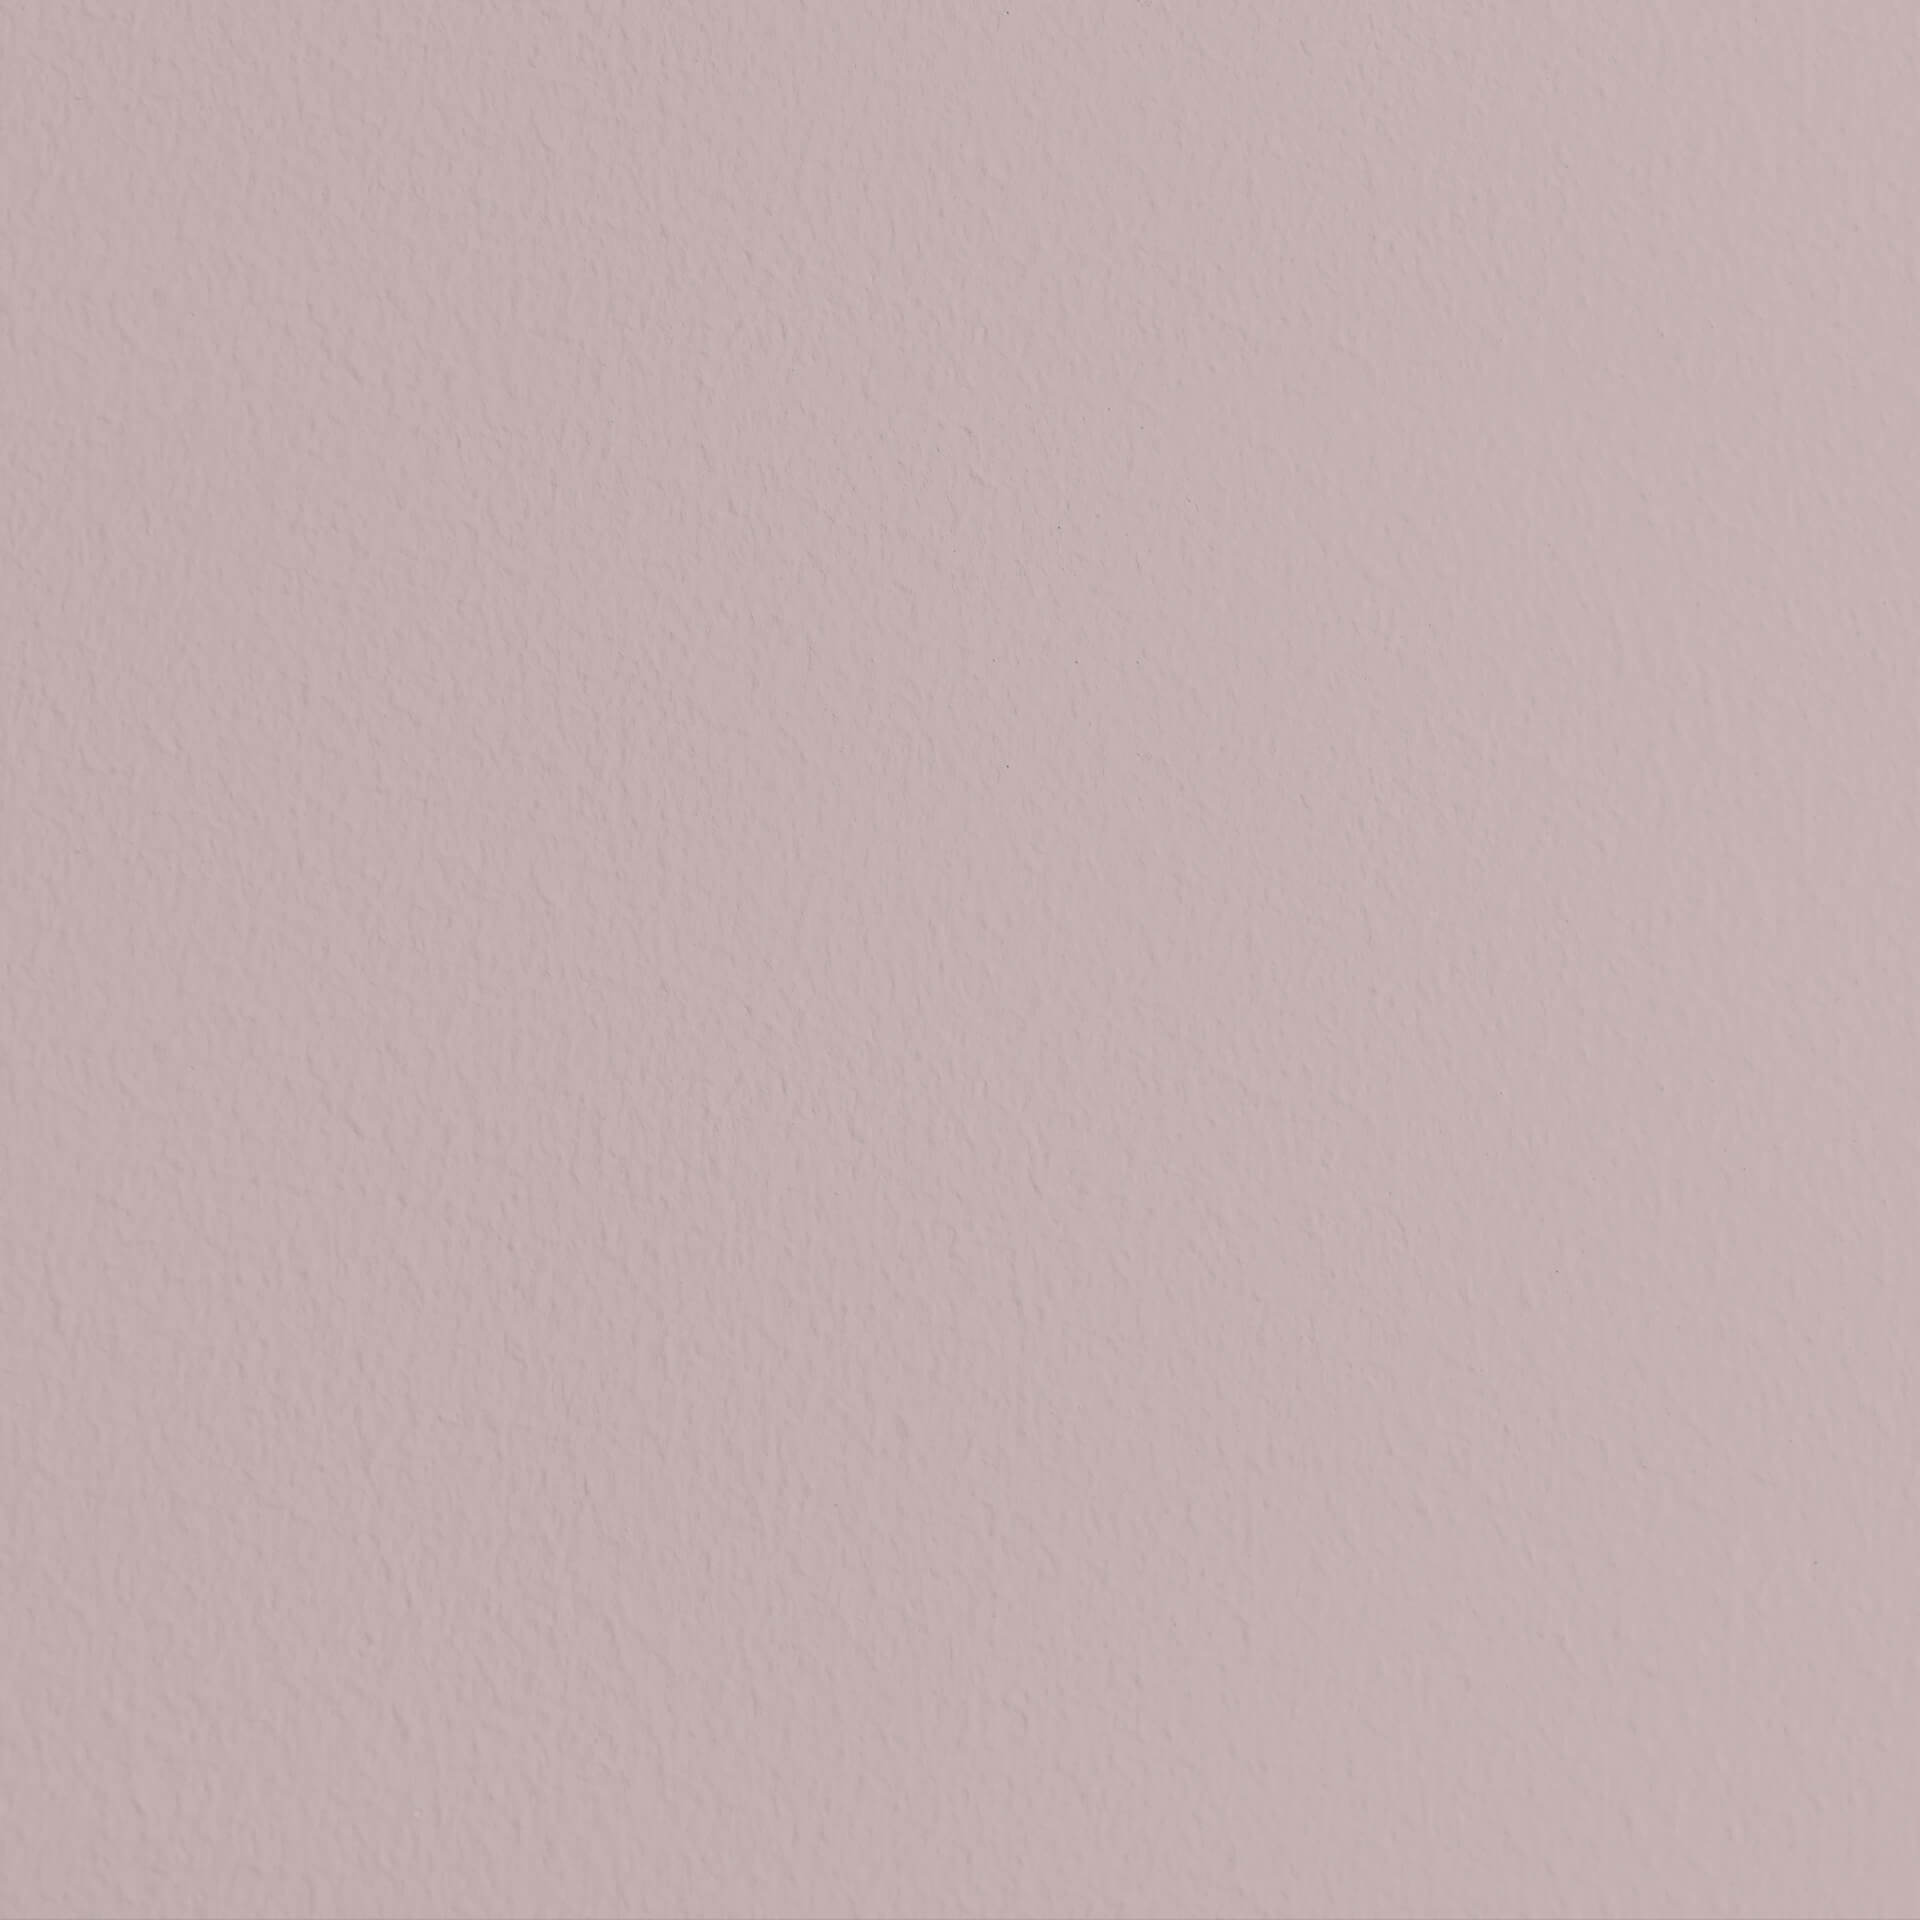 Mylands Pale Lilac No. 246 - Marble Matt Emulsion / Wandfarbe, 100ml